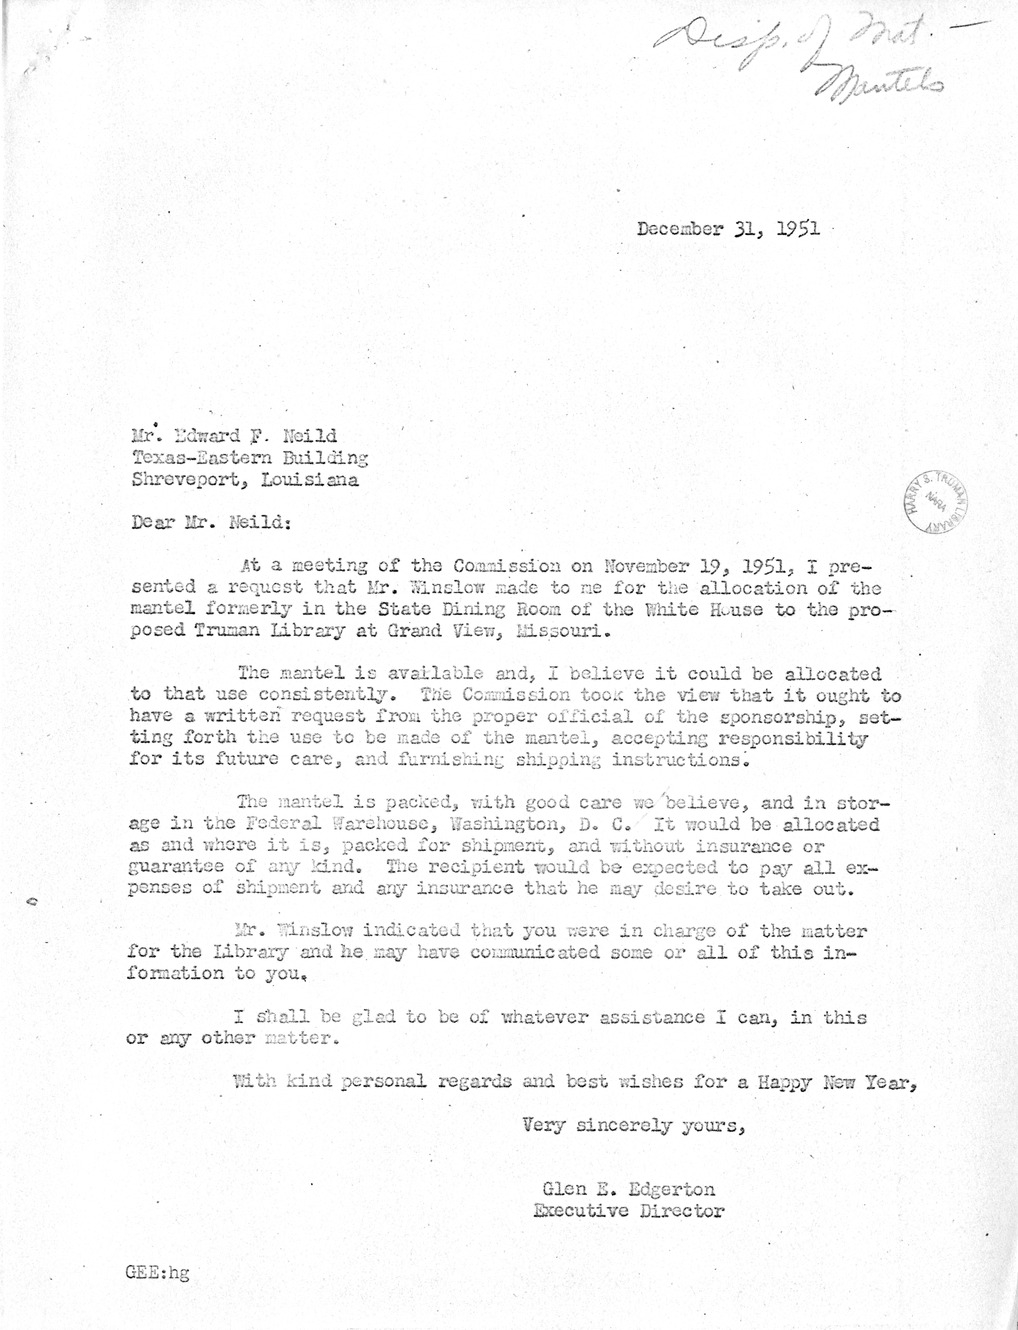 Correspondence Between Major General Glen E. Edgerton and Mr. Edward F. Neild